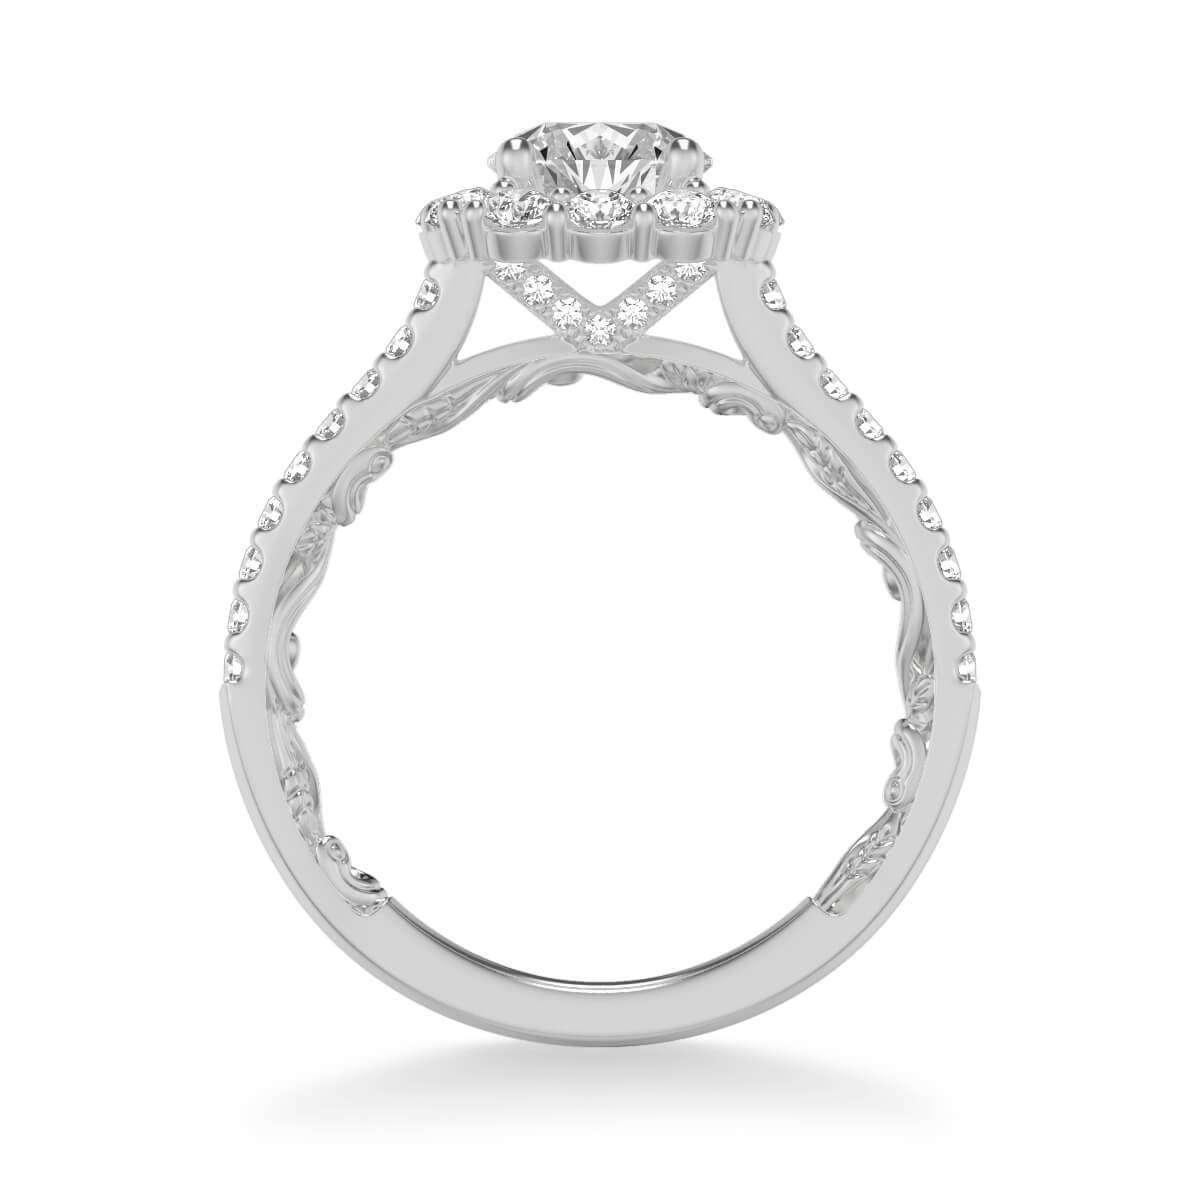 Cherise Lyric Collection Classic Halo Diamond Engagement Ring